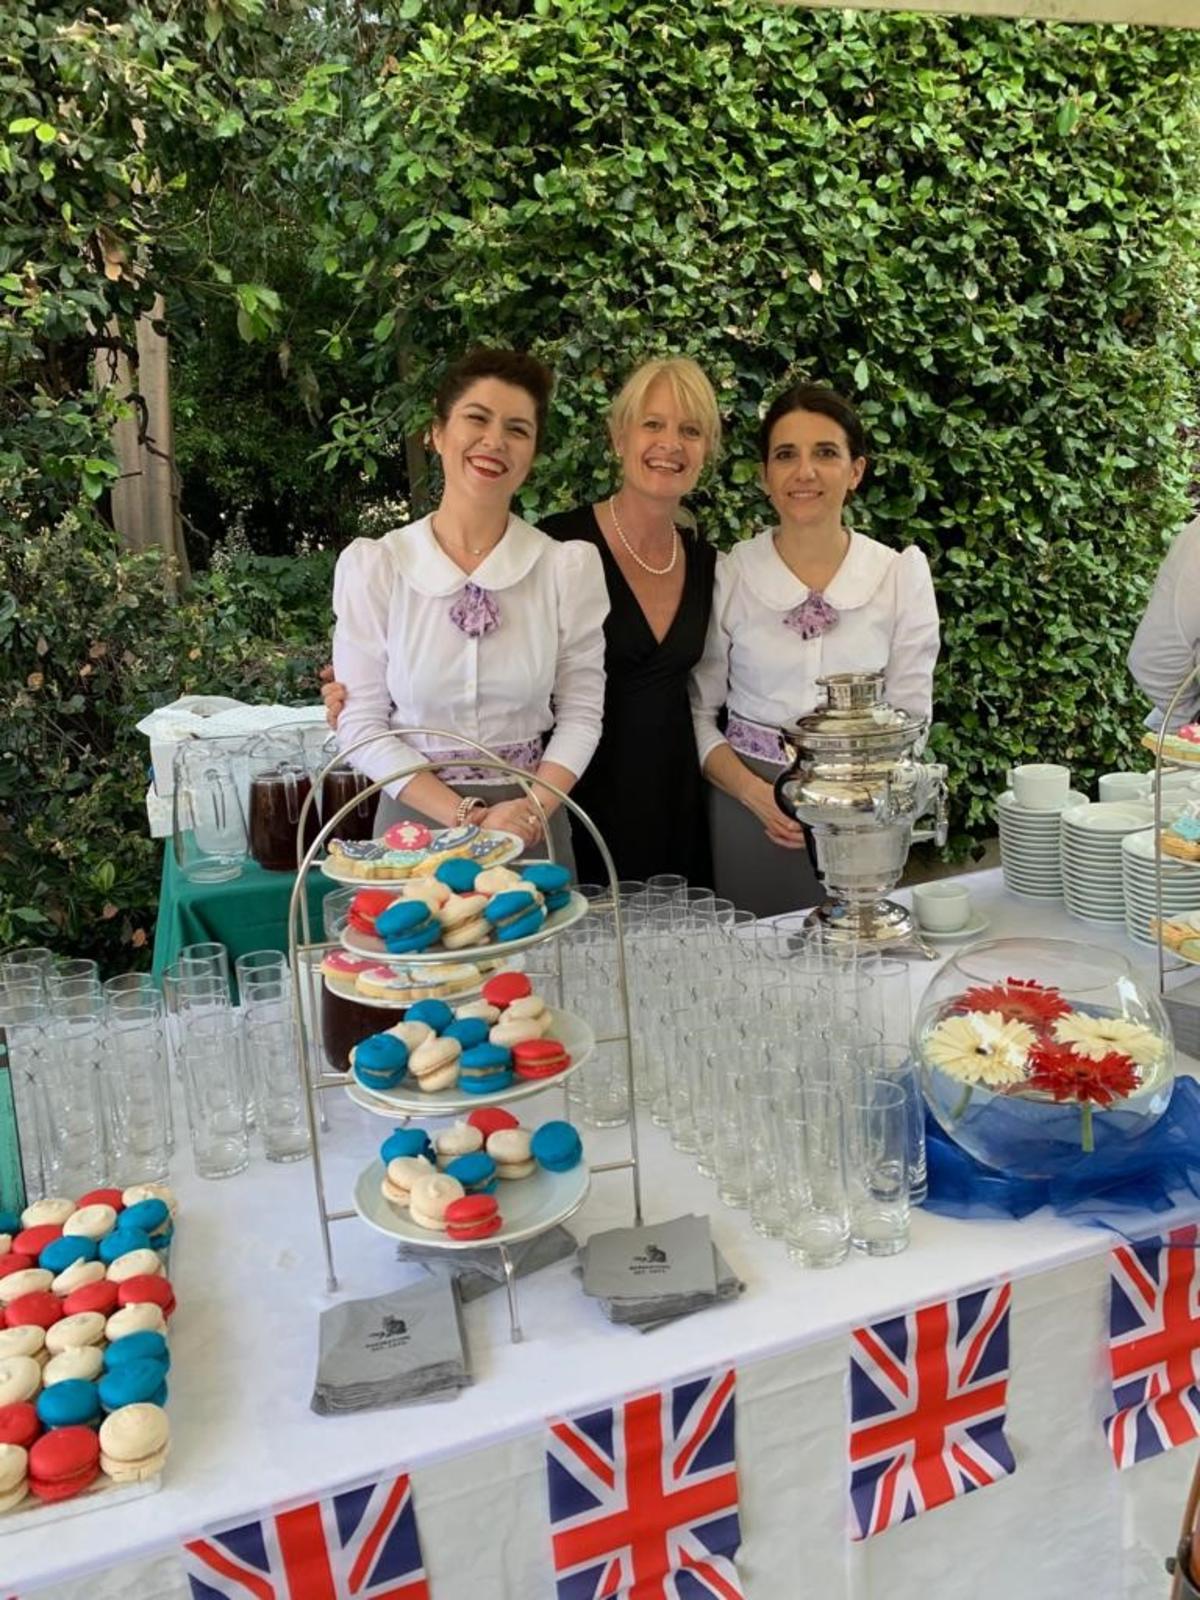 Babingtons celebrates Queen Elizabeth II's birthday with the British Embassy